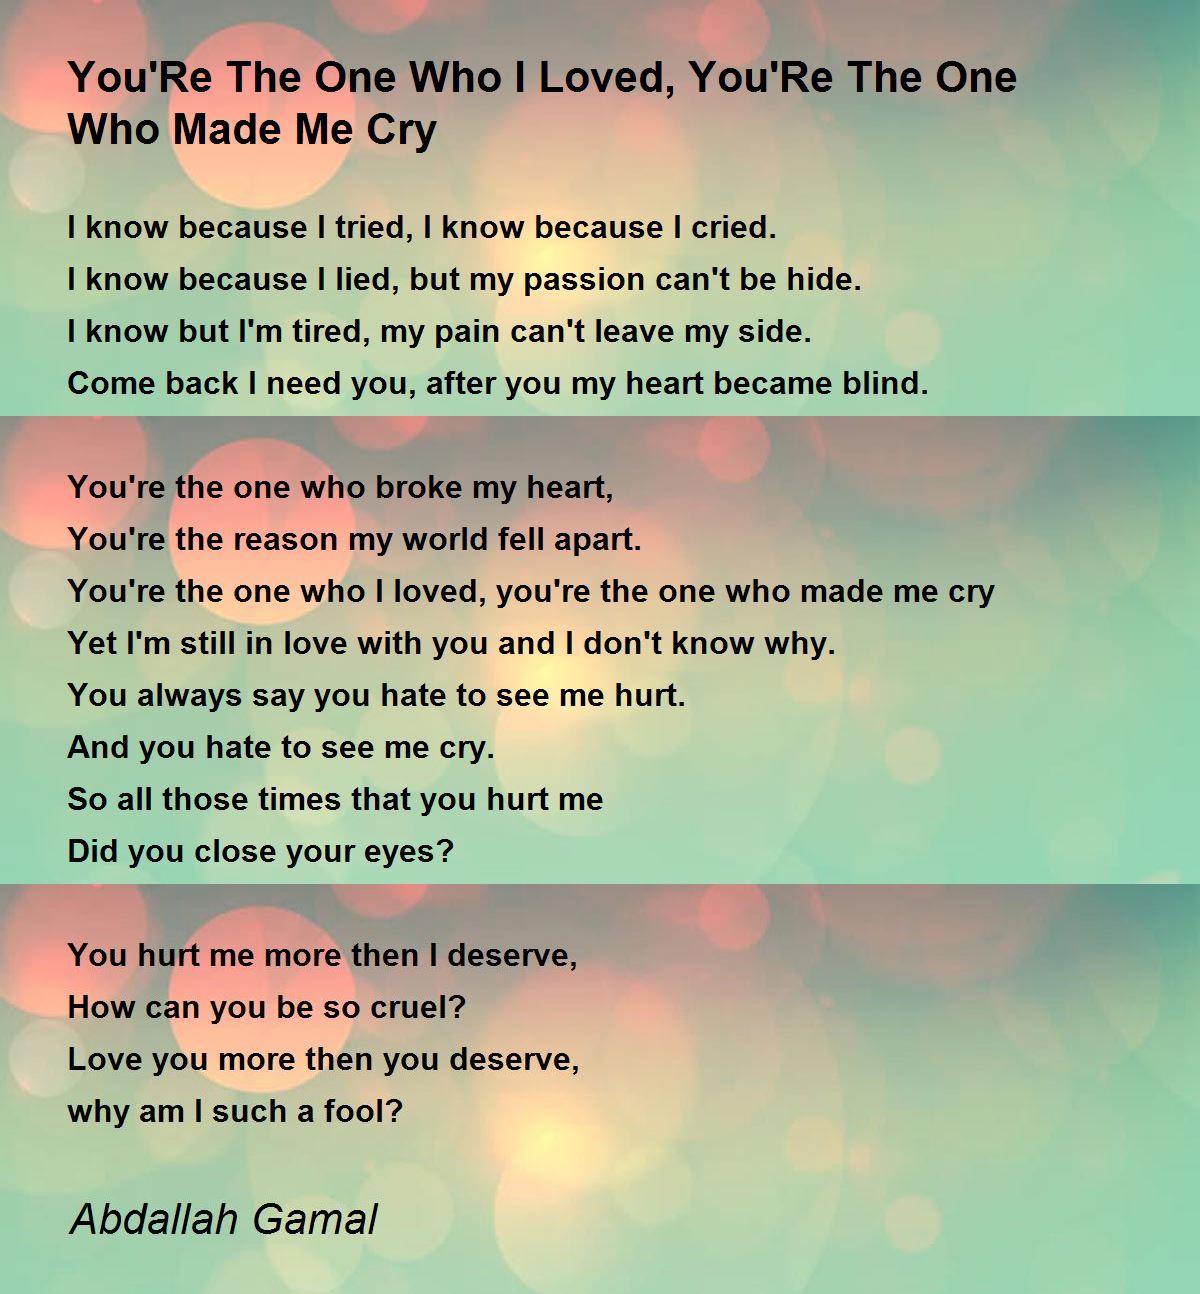 Me Cry Poem By Abd Gamal